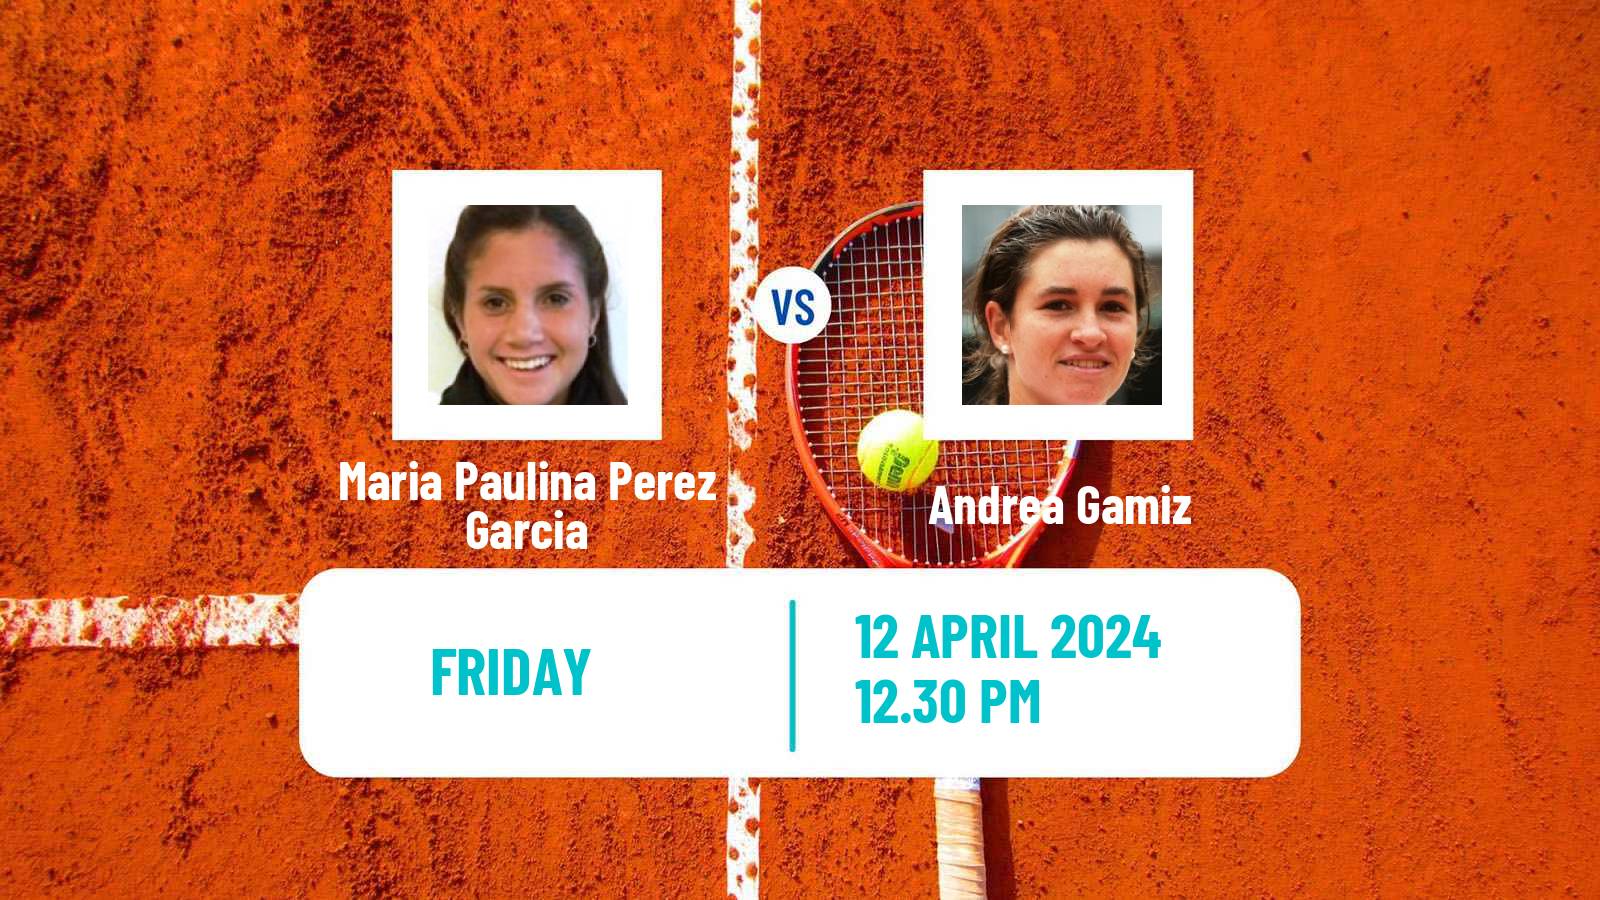 Tennis WTA Billie Jean King Cup Group I Maria Paulina Perez Garcia - Andrea Gamiz